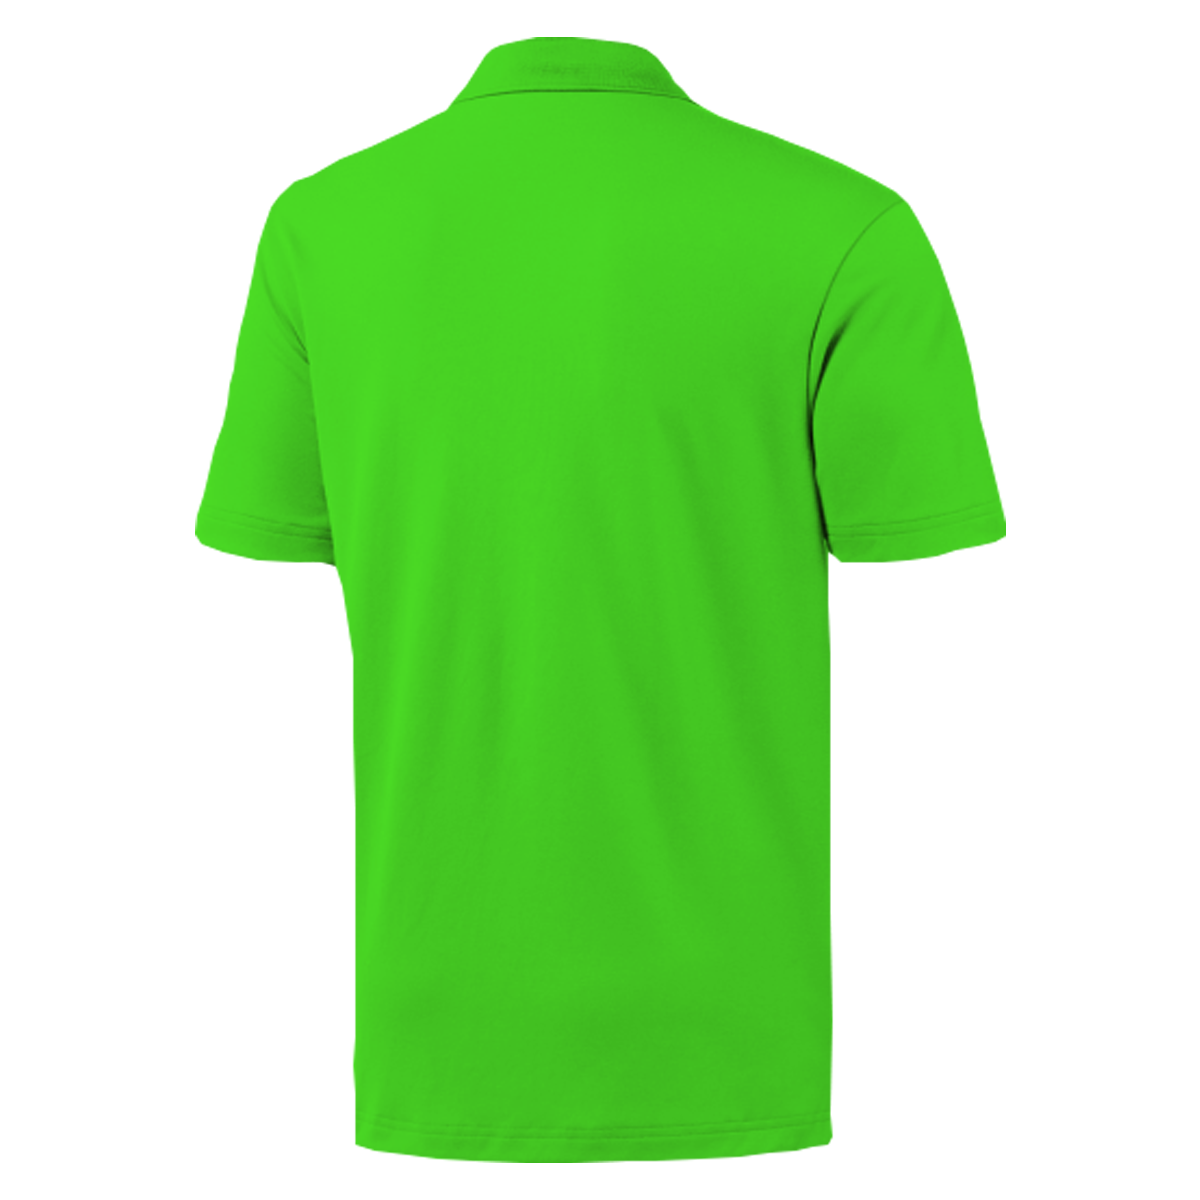 Lime Green Polo Shirt - Unisex - Branding & Printing Solutions Company ...